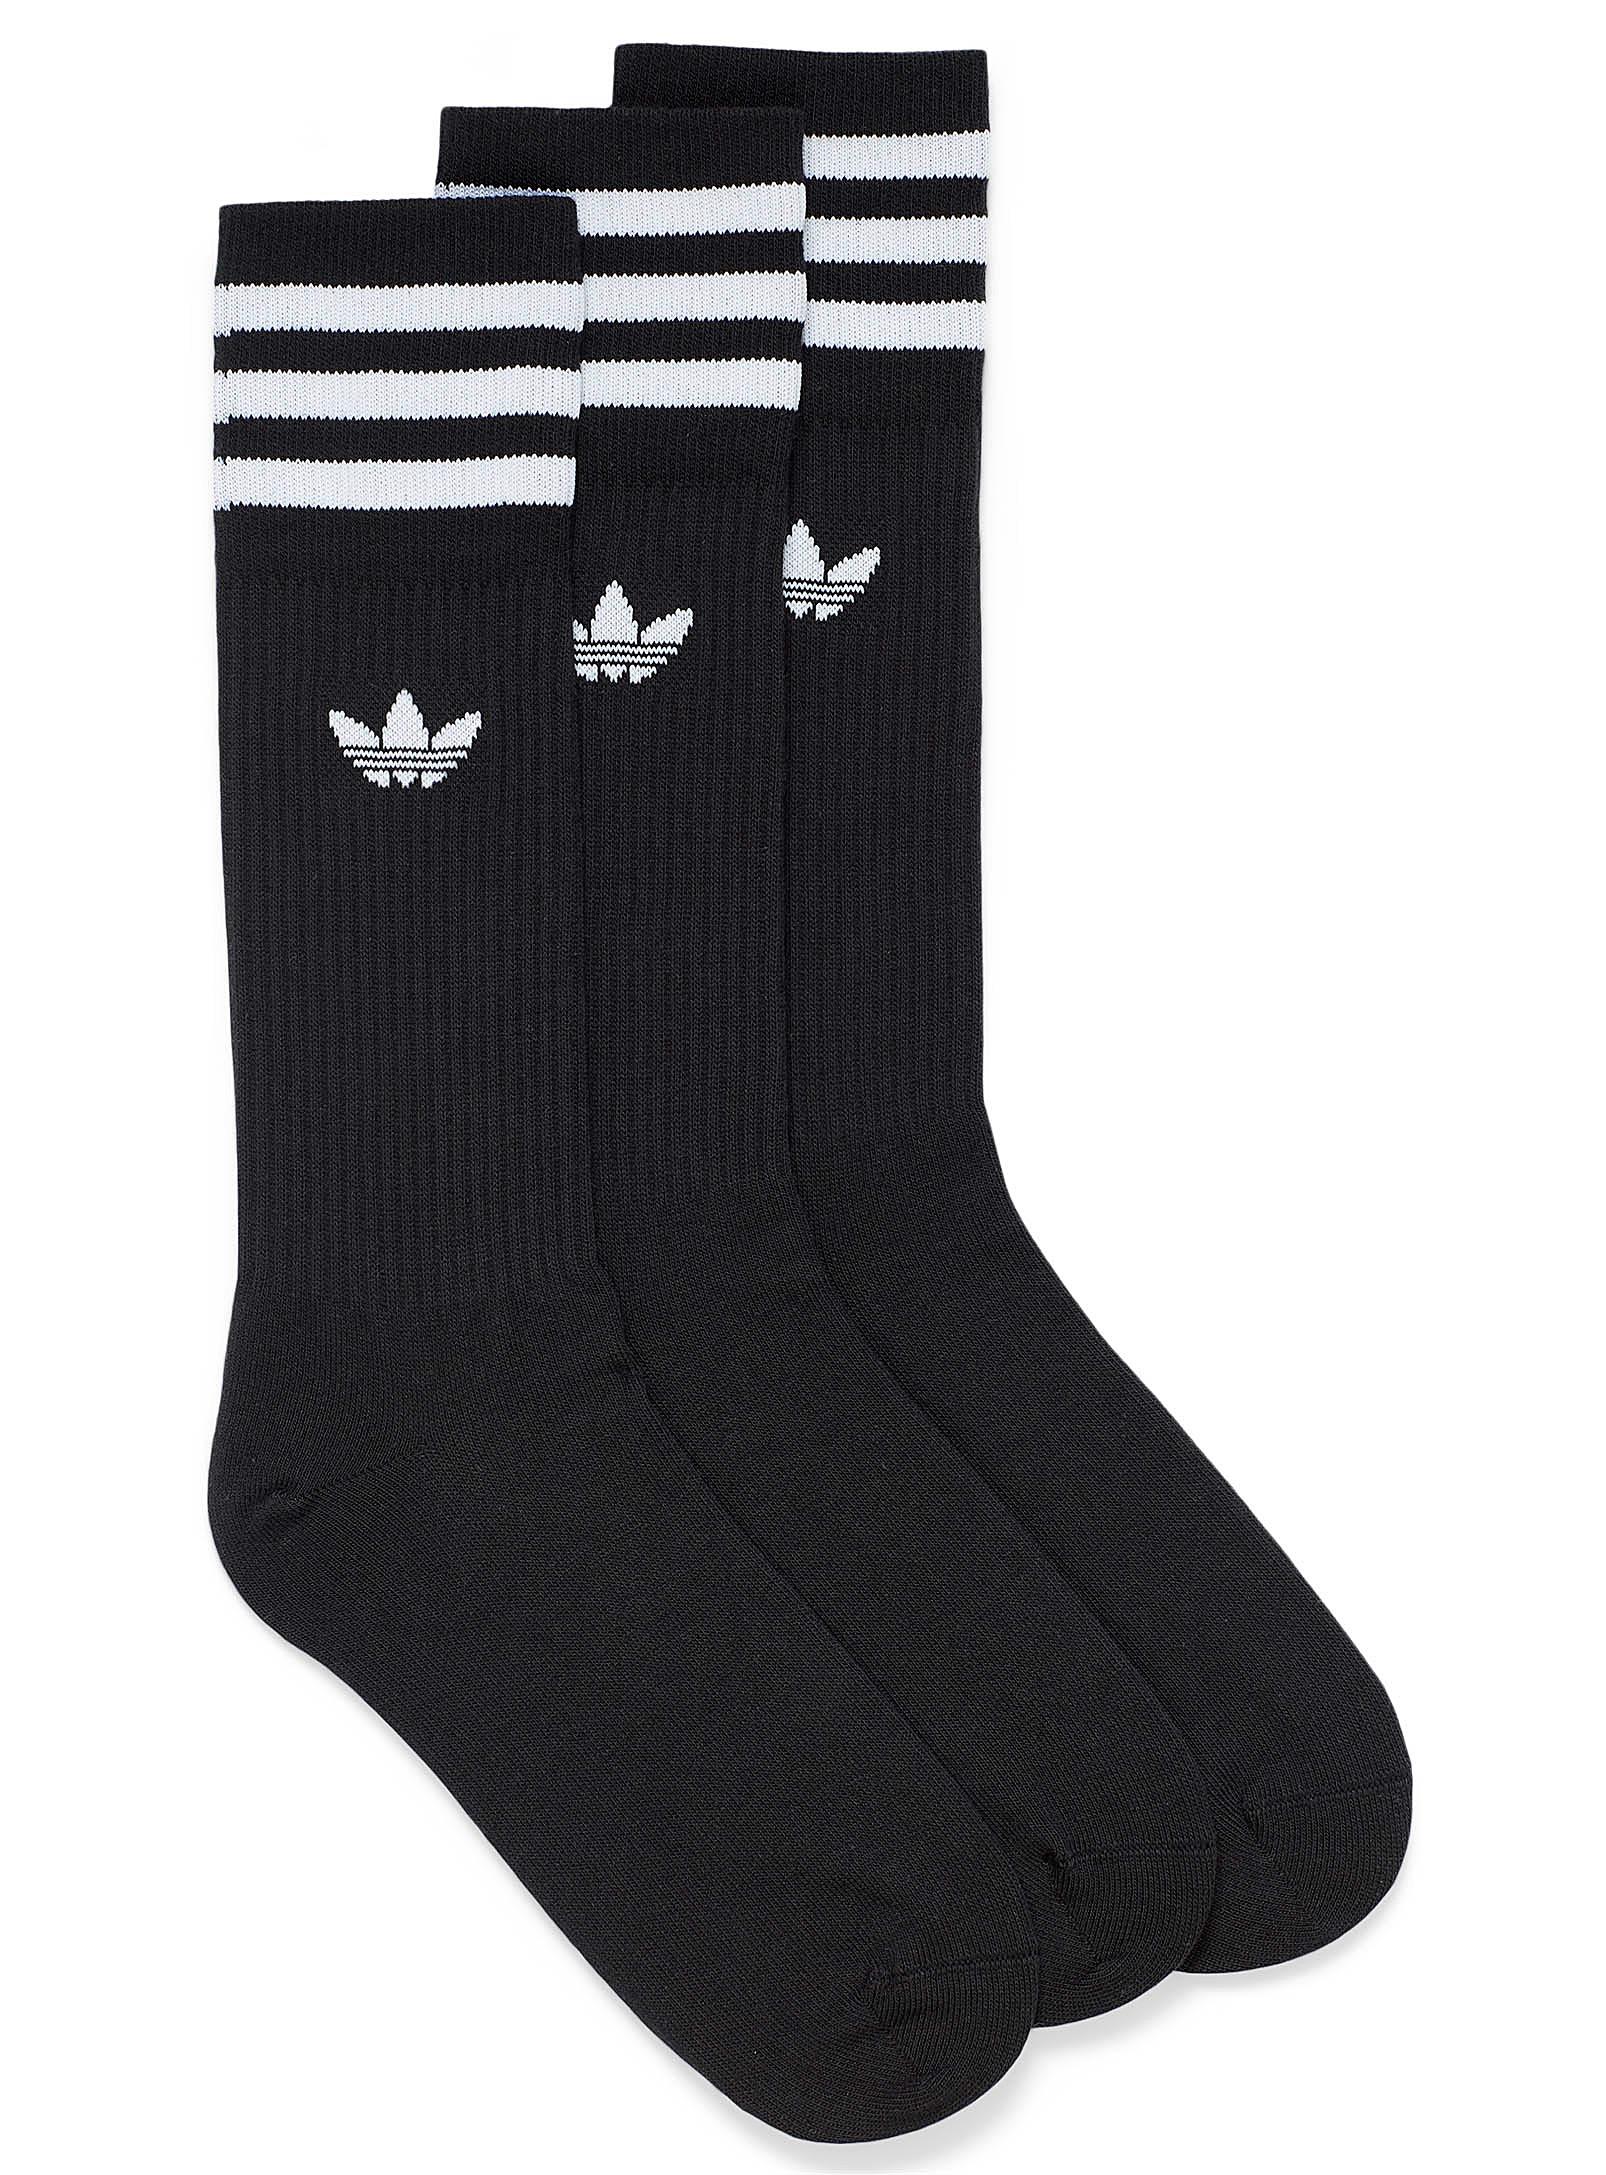 adidas Originals Sports Socks Set Of 3 in Black - Save 45% | Lyst